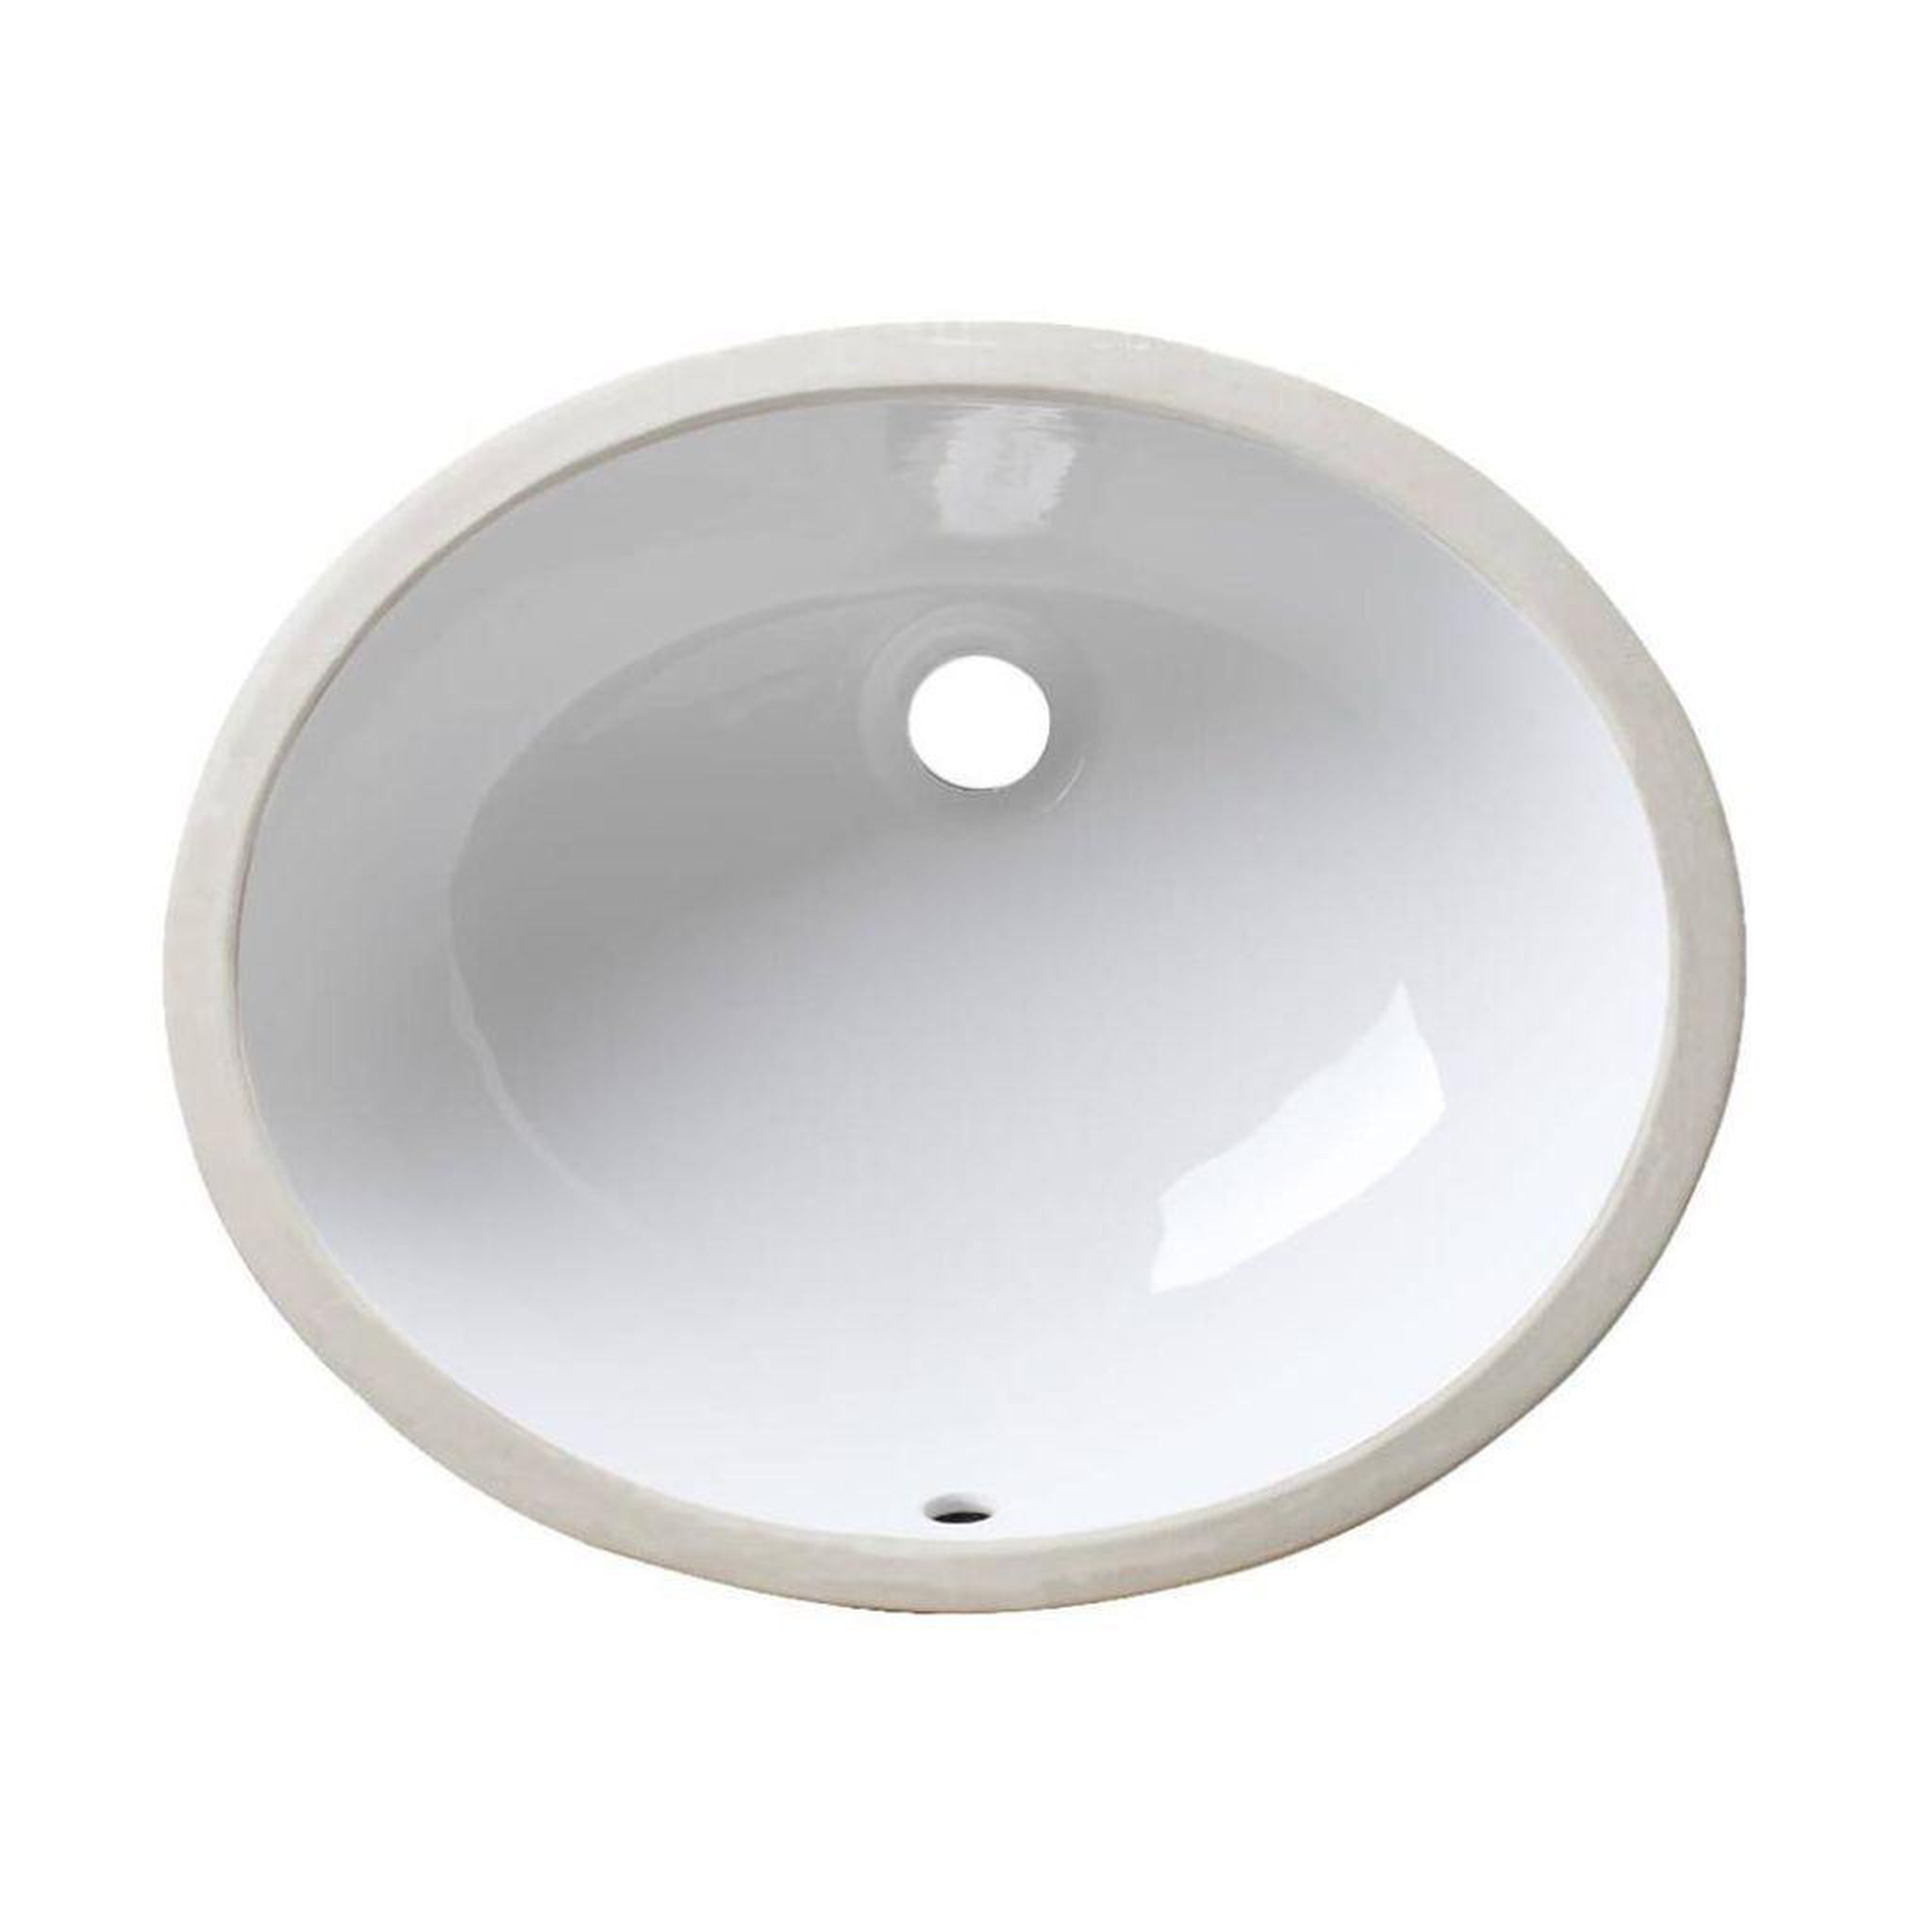 Allora USA, Allora USA 18.5" X 15.125" Vitreous China White Oval Porcelain Undermount Sink with Overflow